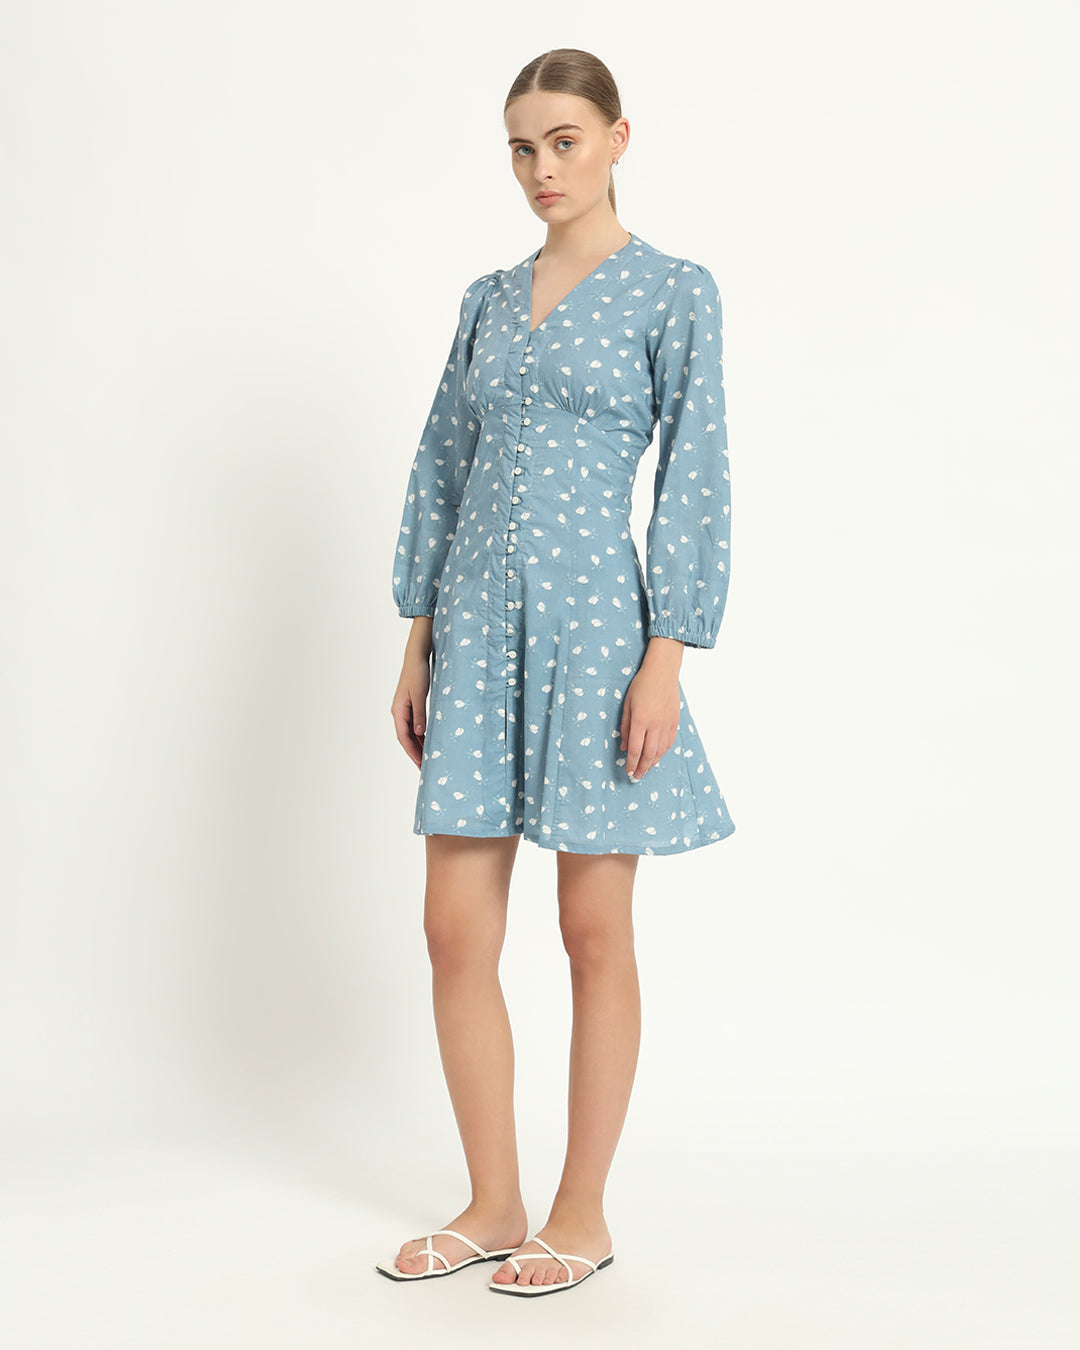 The Dafni Bluebell Cotton Dress